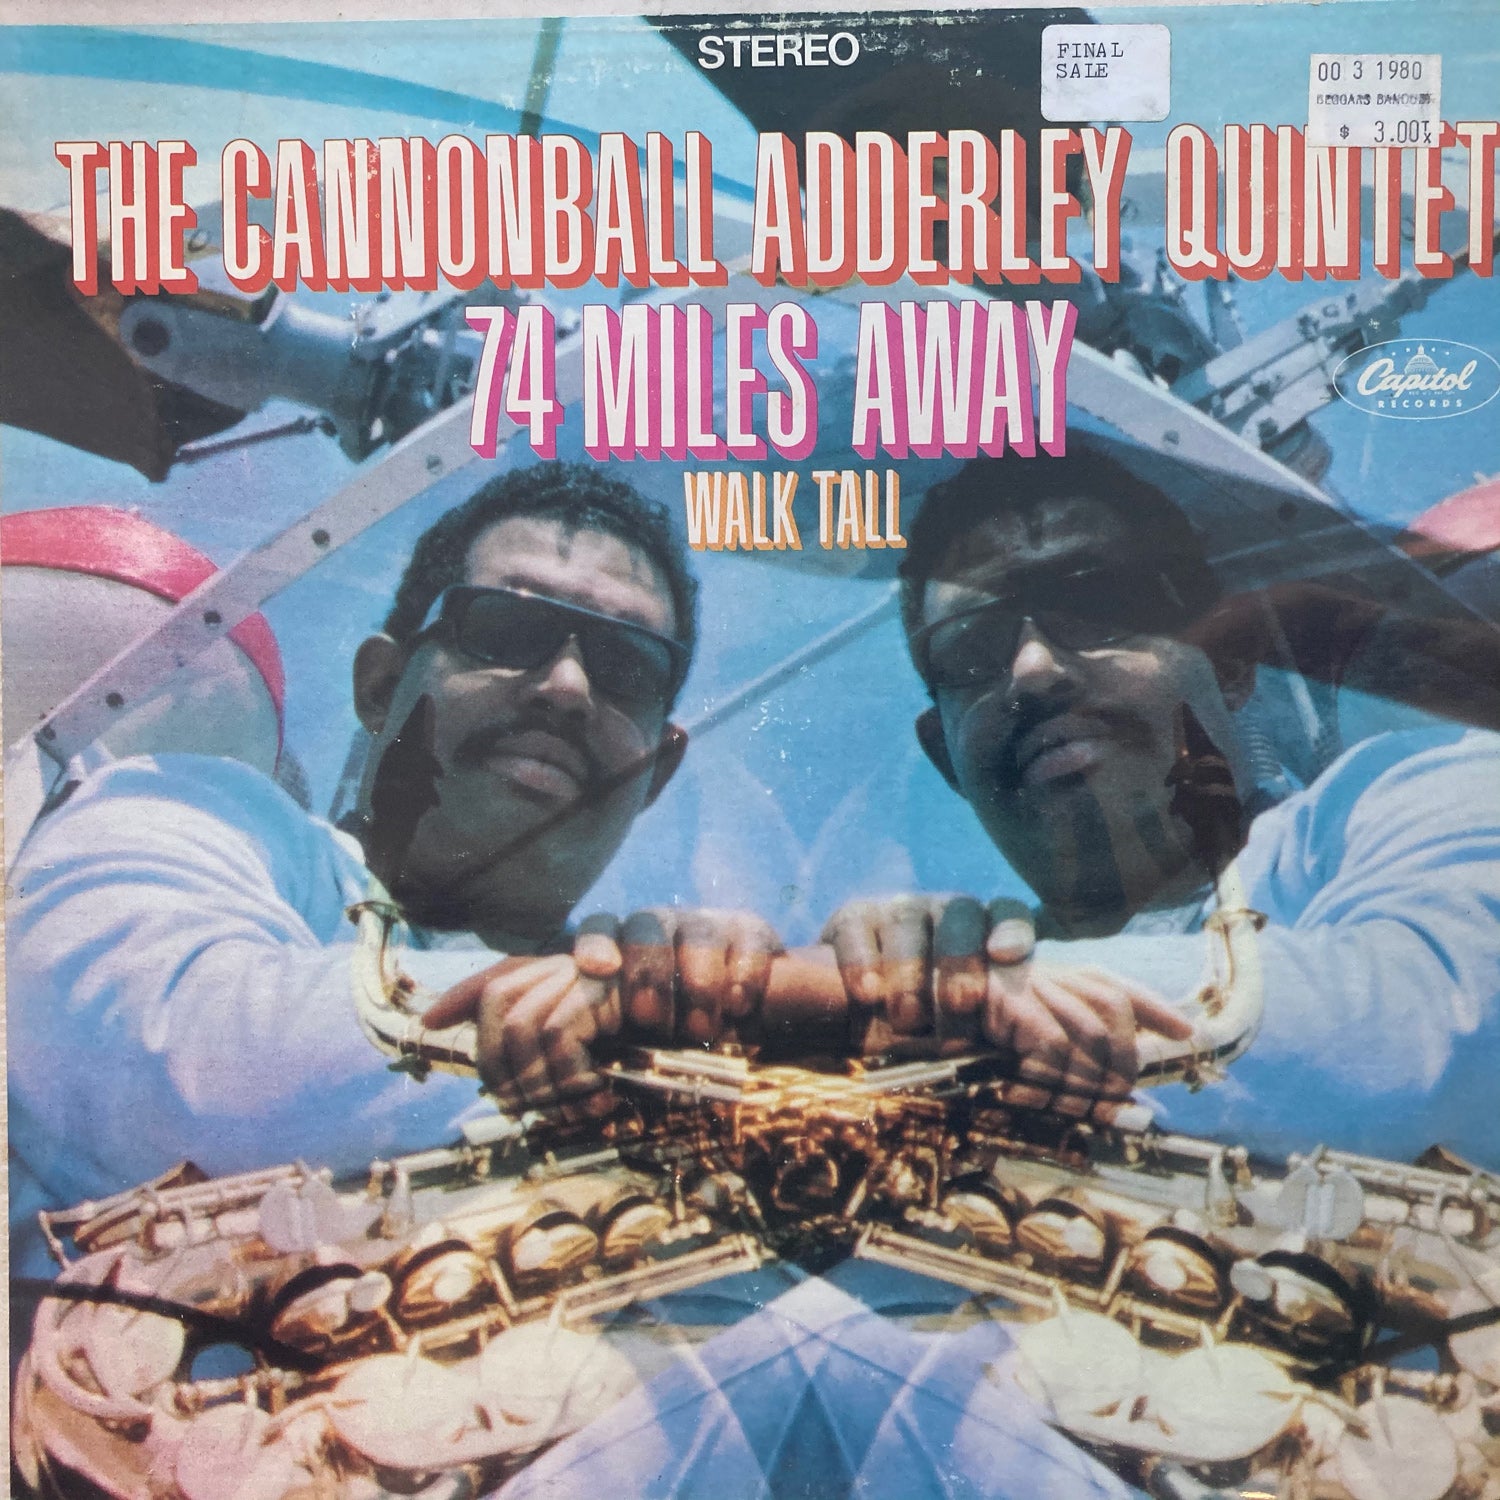 The Cannonball Adderley Quintet - 74 Miles Away / Walk Tall